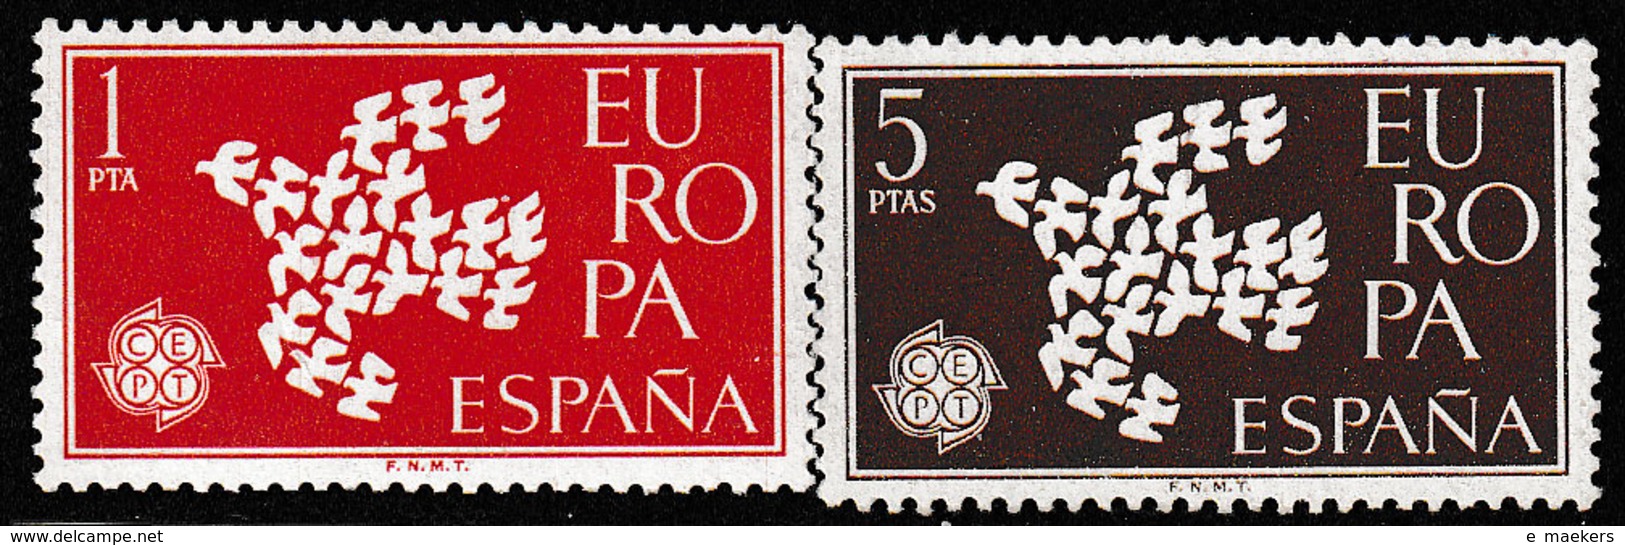 Spanje 1961  - Michel  1266/1267**- POSTFRIS - NEUF SANS CHARNIERES - MNH - POSTFRISCH - Catw. 0,8€ - Neufs